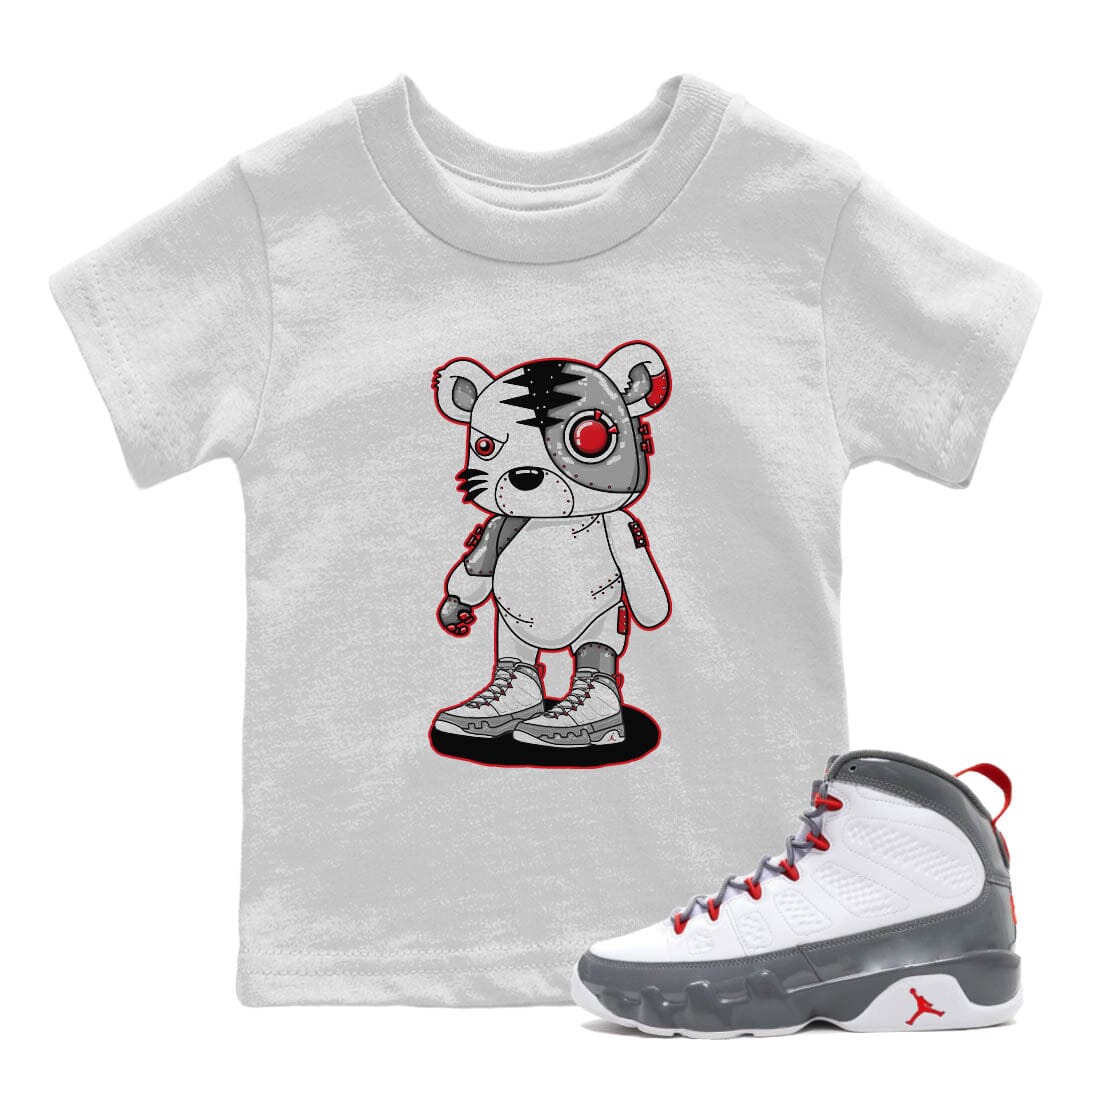 Jordan 9 Fire Red Sneaker Match Tees Cyborg Tiger Sneaker Tees Jordan 9 Fire Red Sneaker Release Tees Kids Shirts